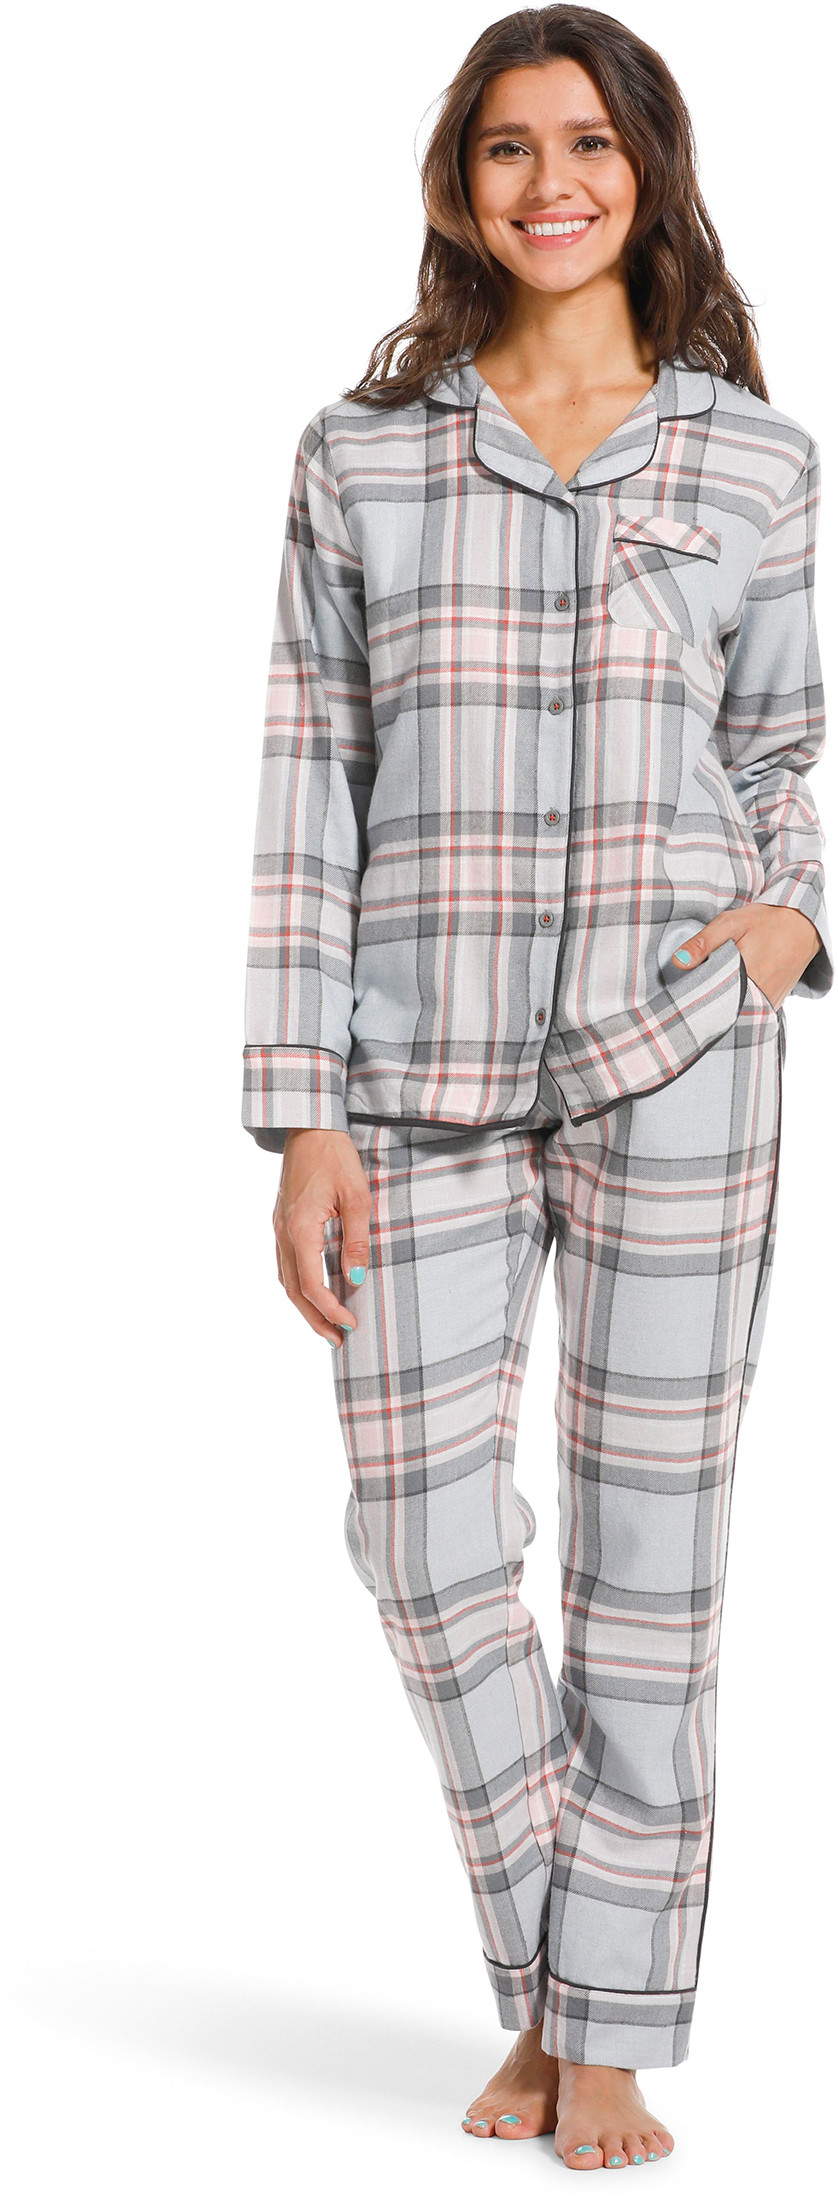 Rebelle dames pyjama flanel 21222-458-6-44